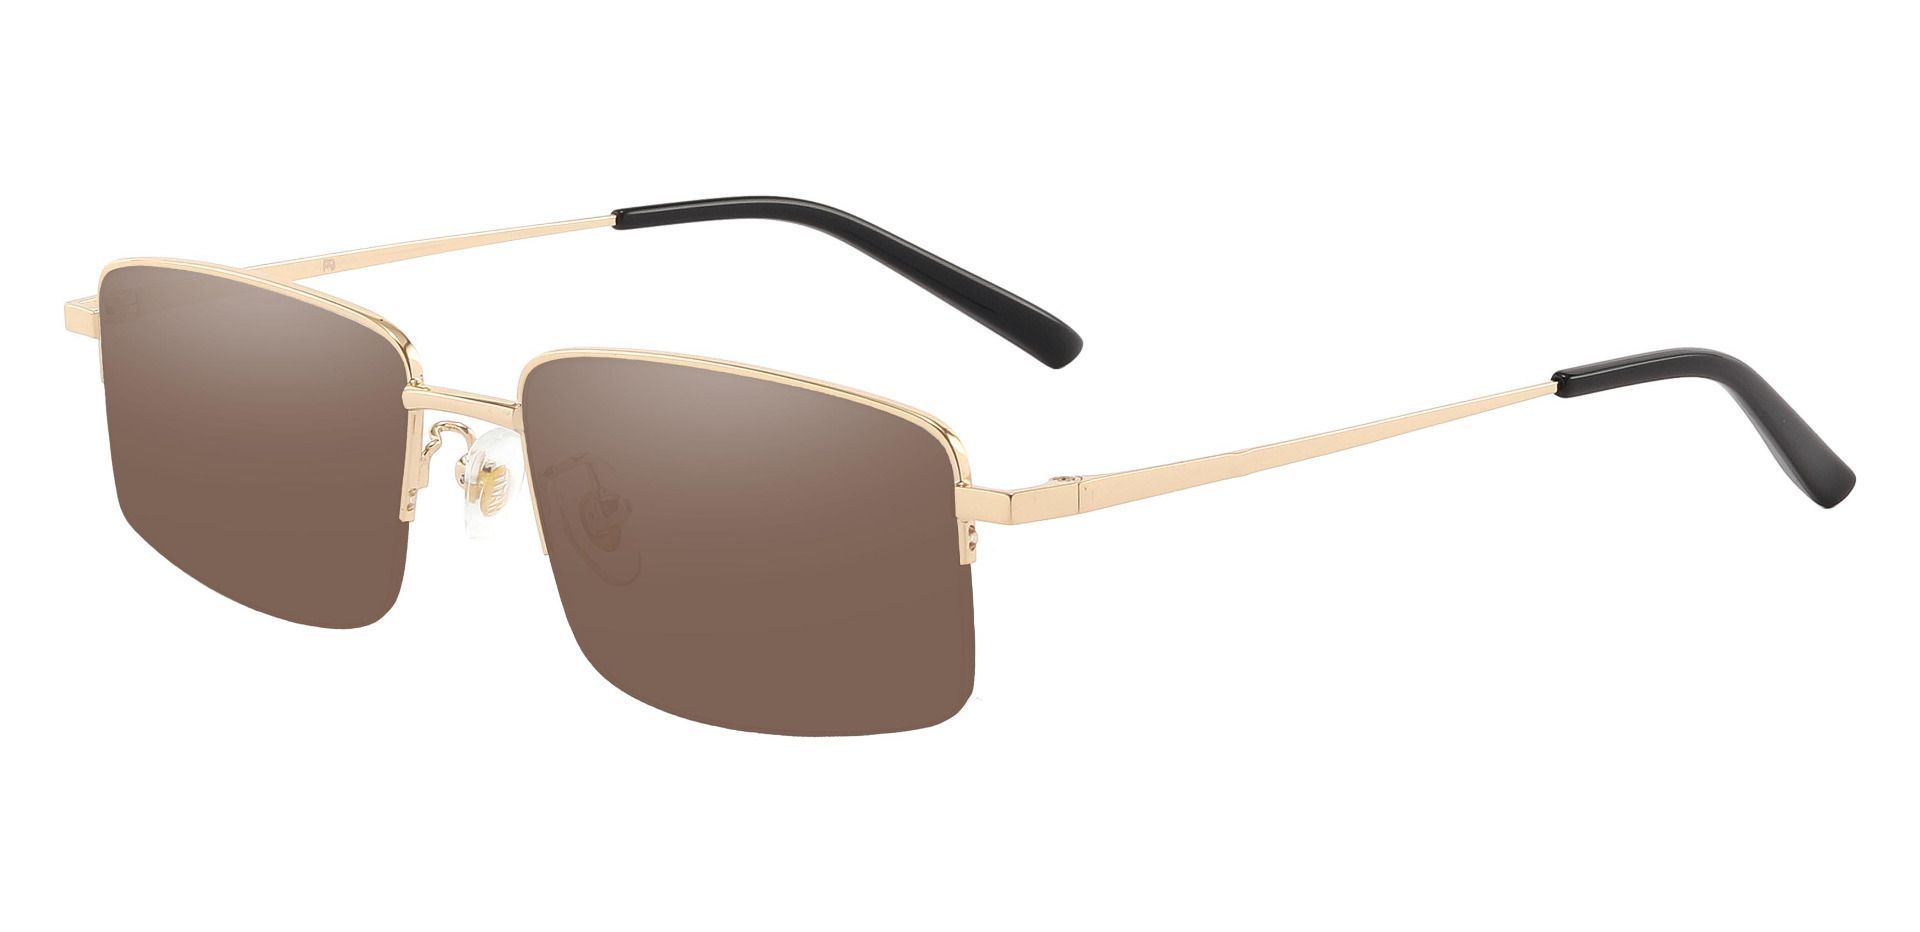 Wayne Rectangle Prescription Sunglasses - Gold Frame With Brown Lenses